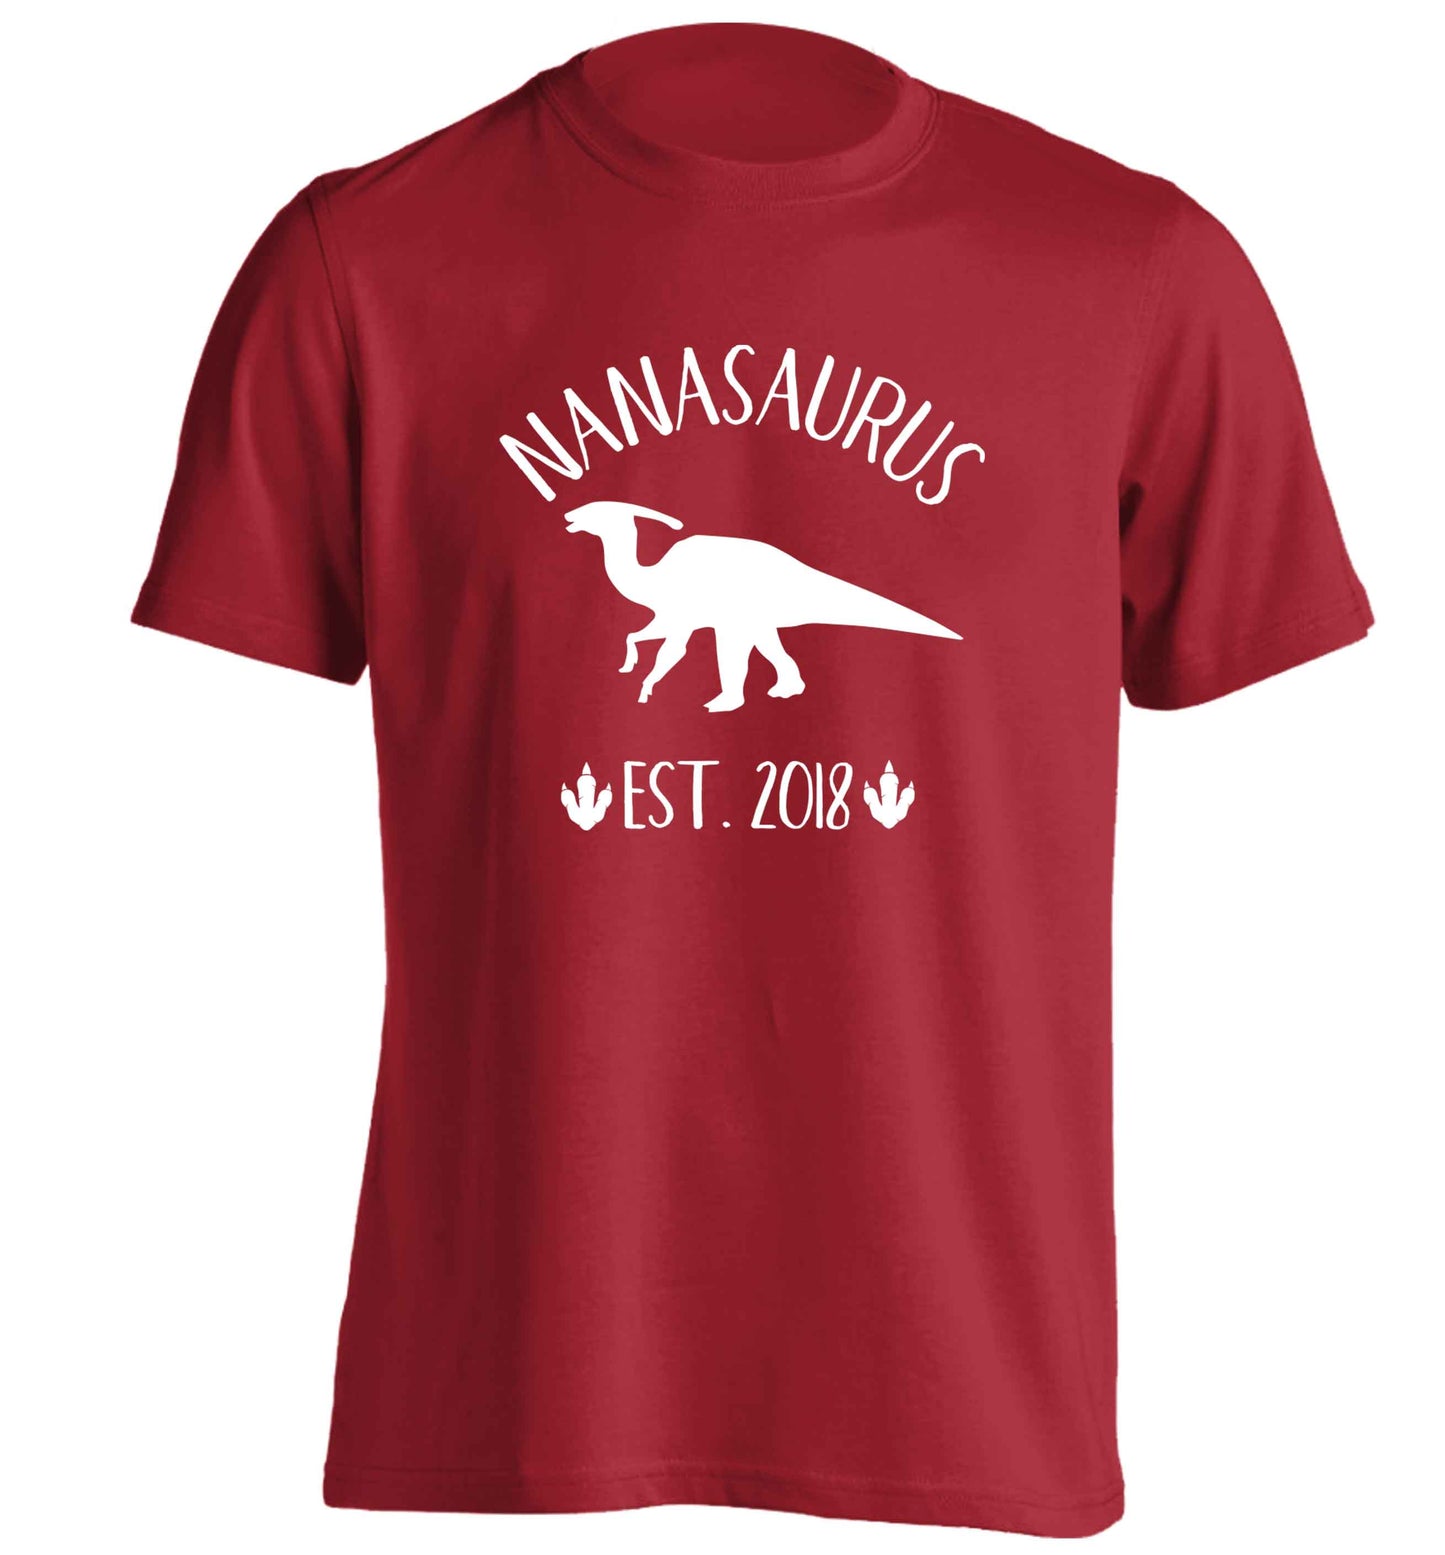 Personalised nanasaurus since (custom date) adults unisex red Tshirt 2XL